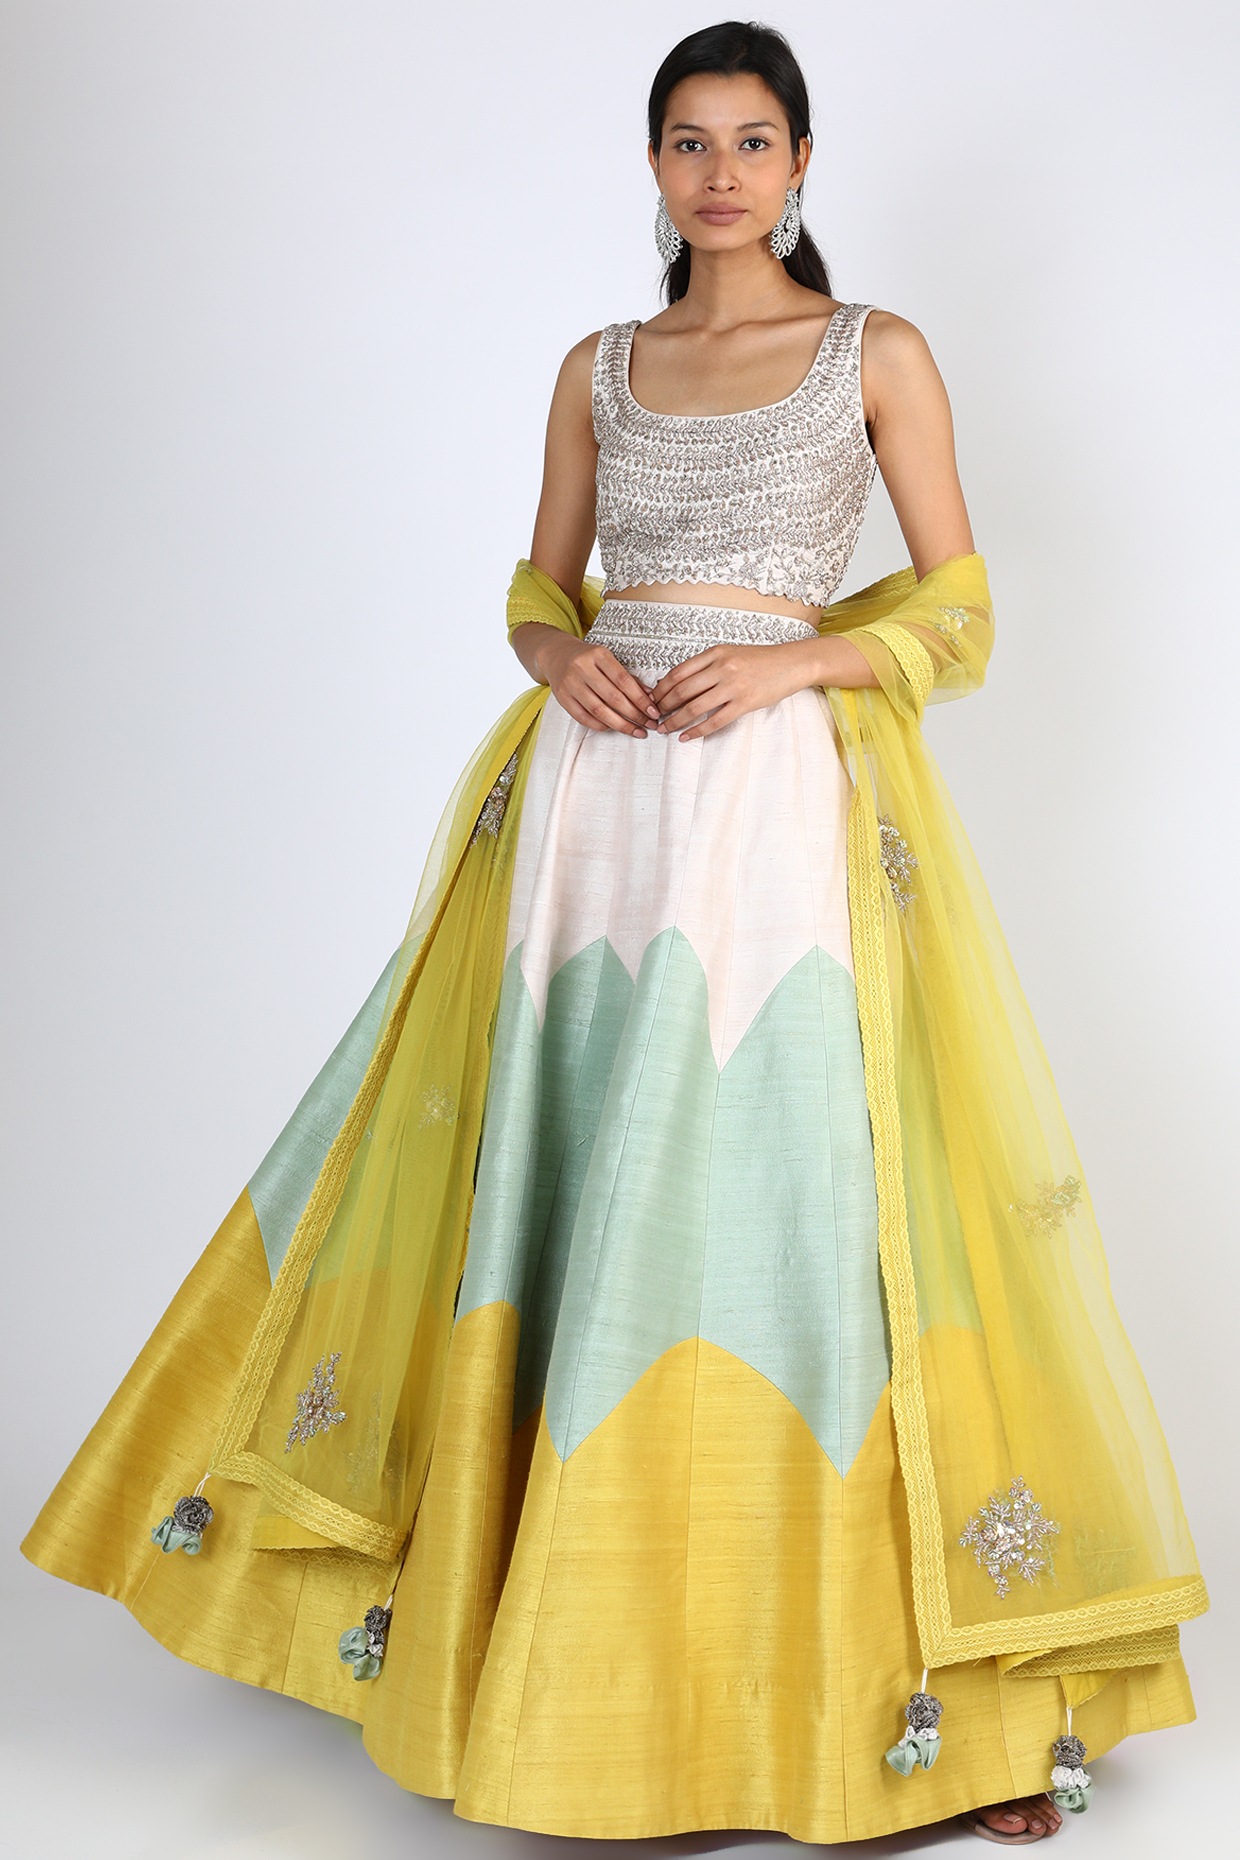 Designer Mehendi Dresses Collection ...